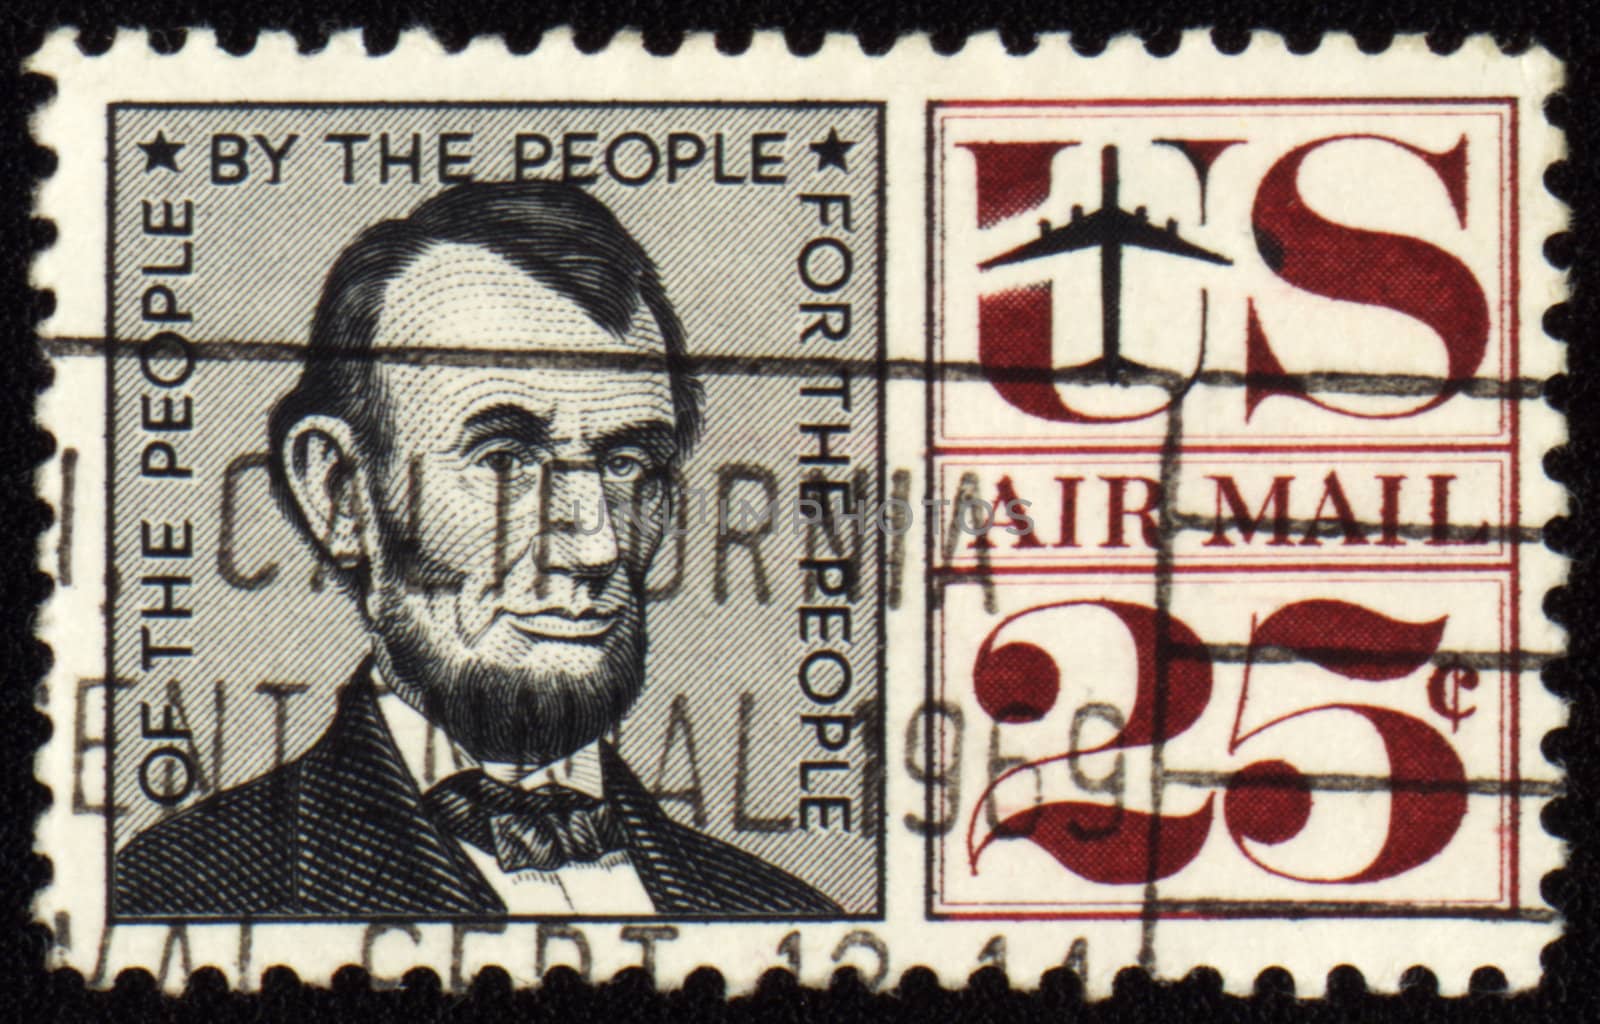 USA - CIRCA 1959: A stamp printed in USA shows president Abraham Lincoln (1809-1865), circa 1959